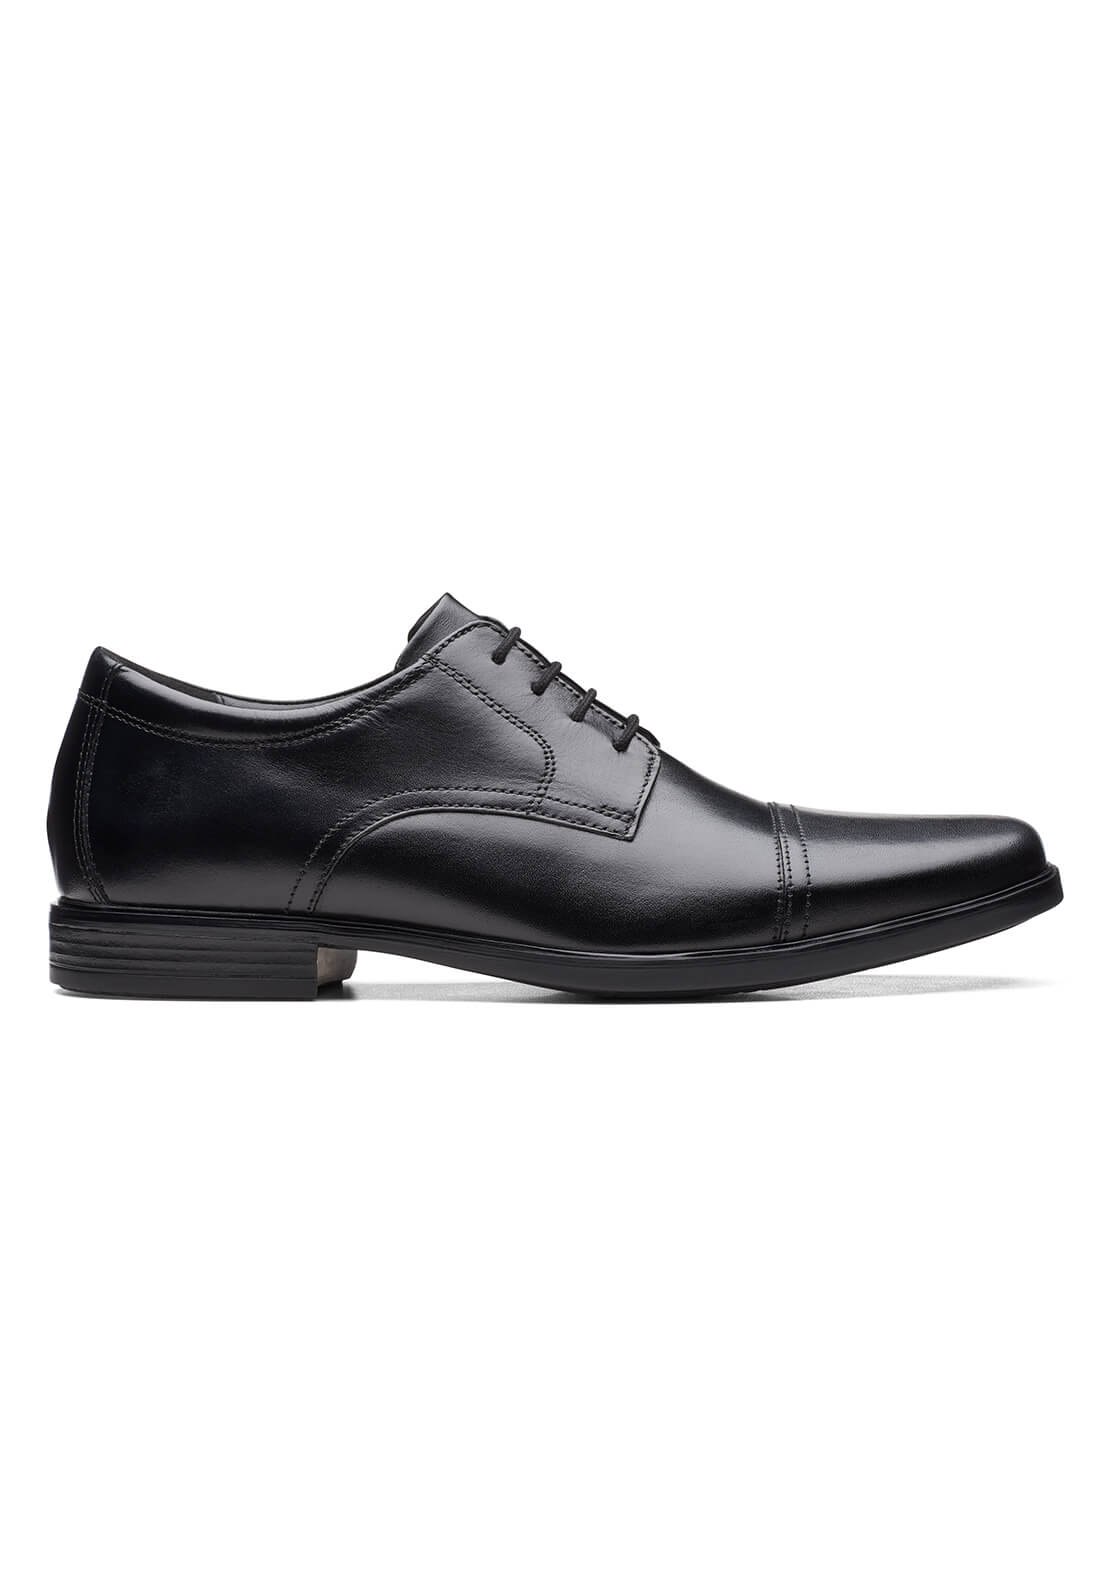 Clarks Howard Cap Formal Shoe - Black 4 Shaws Department Stores